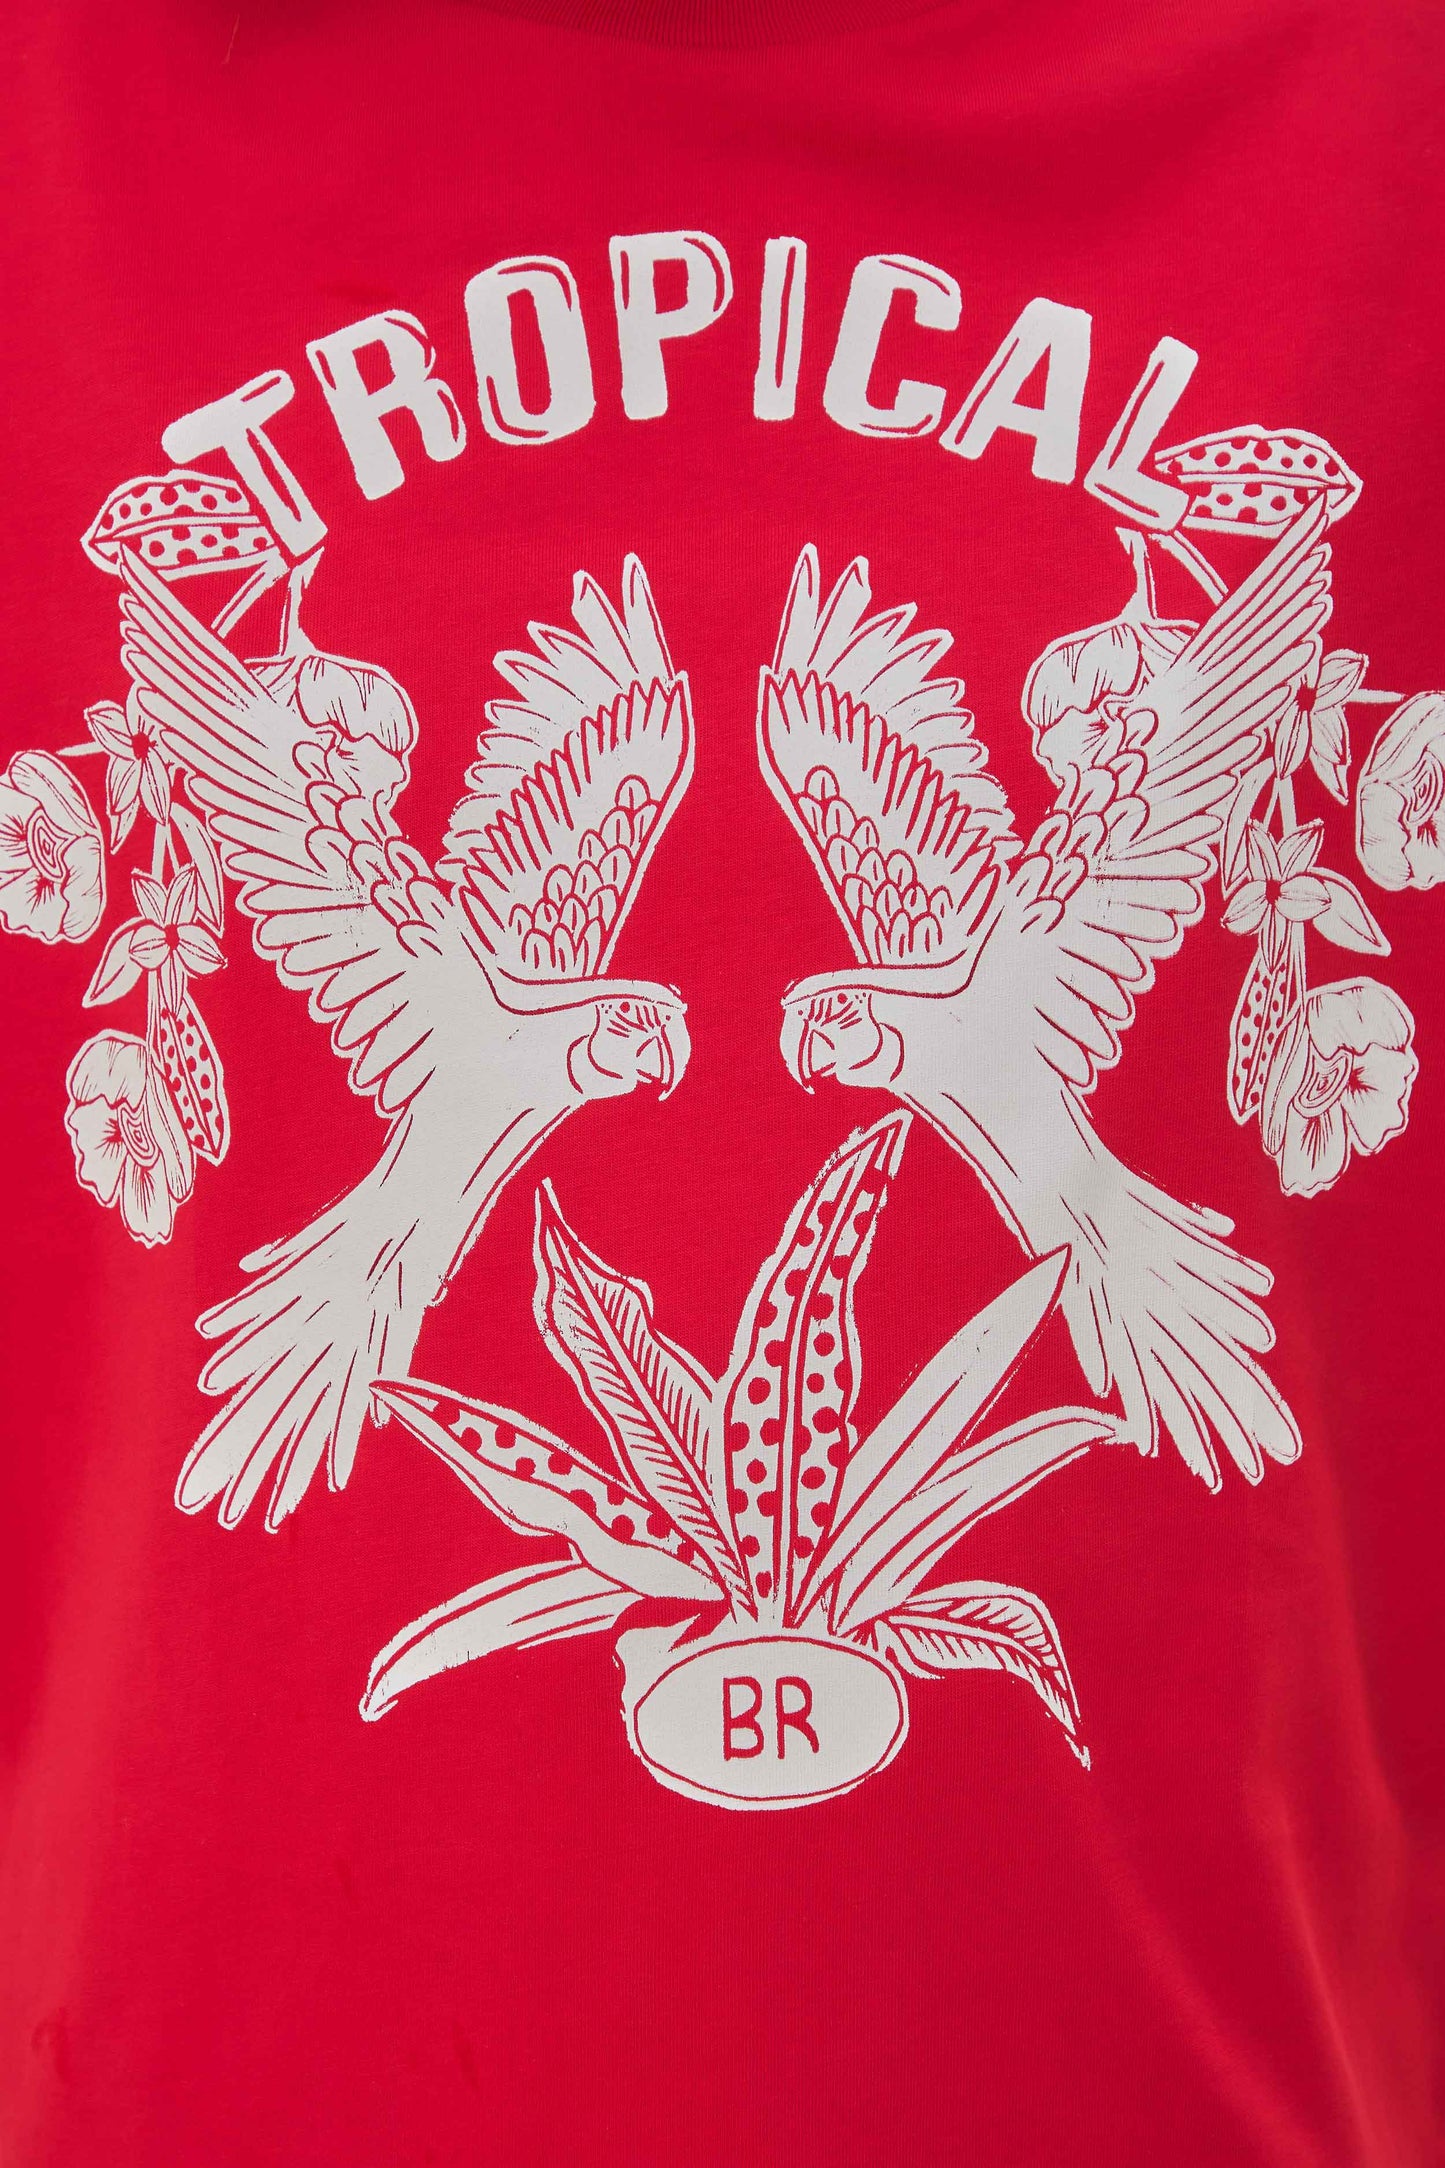 Red Tropical Organic Cotton T-Shirt